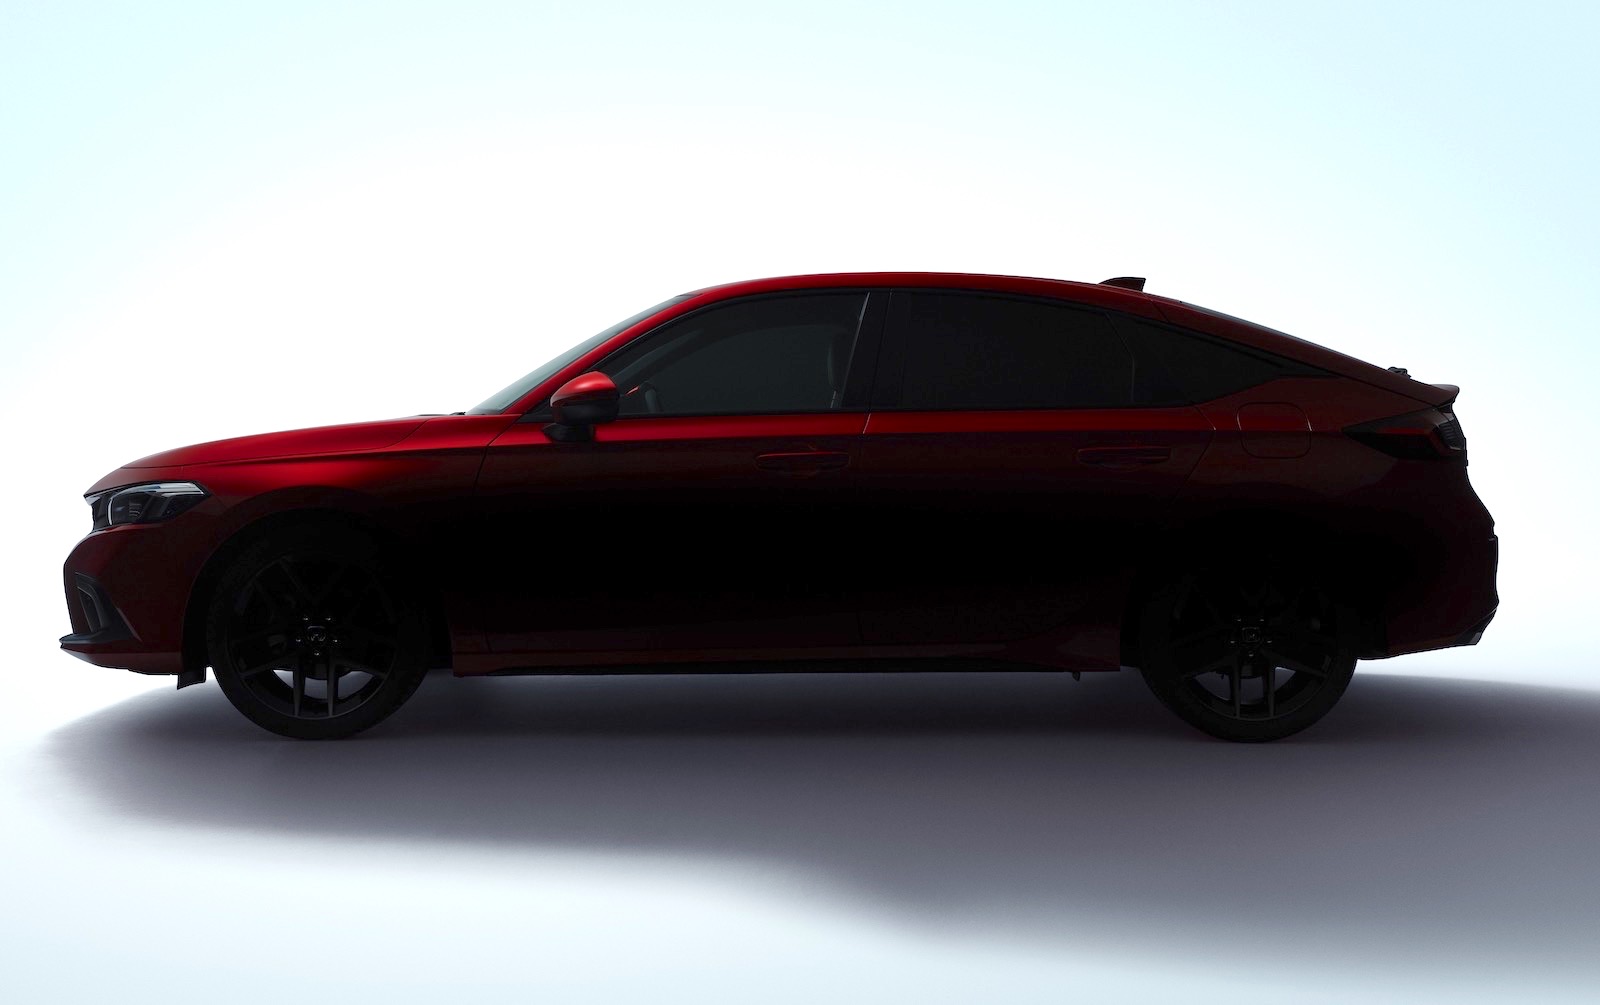 Honda previews next-gen 2022 Civic hatch